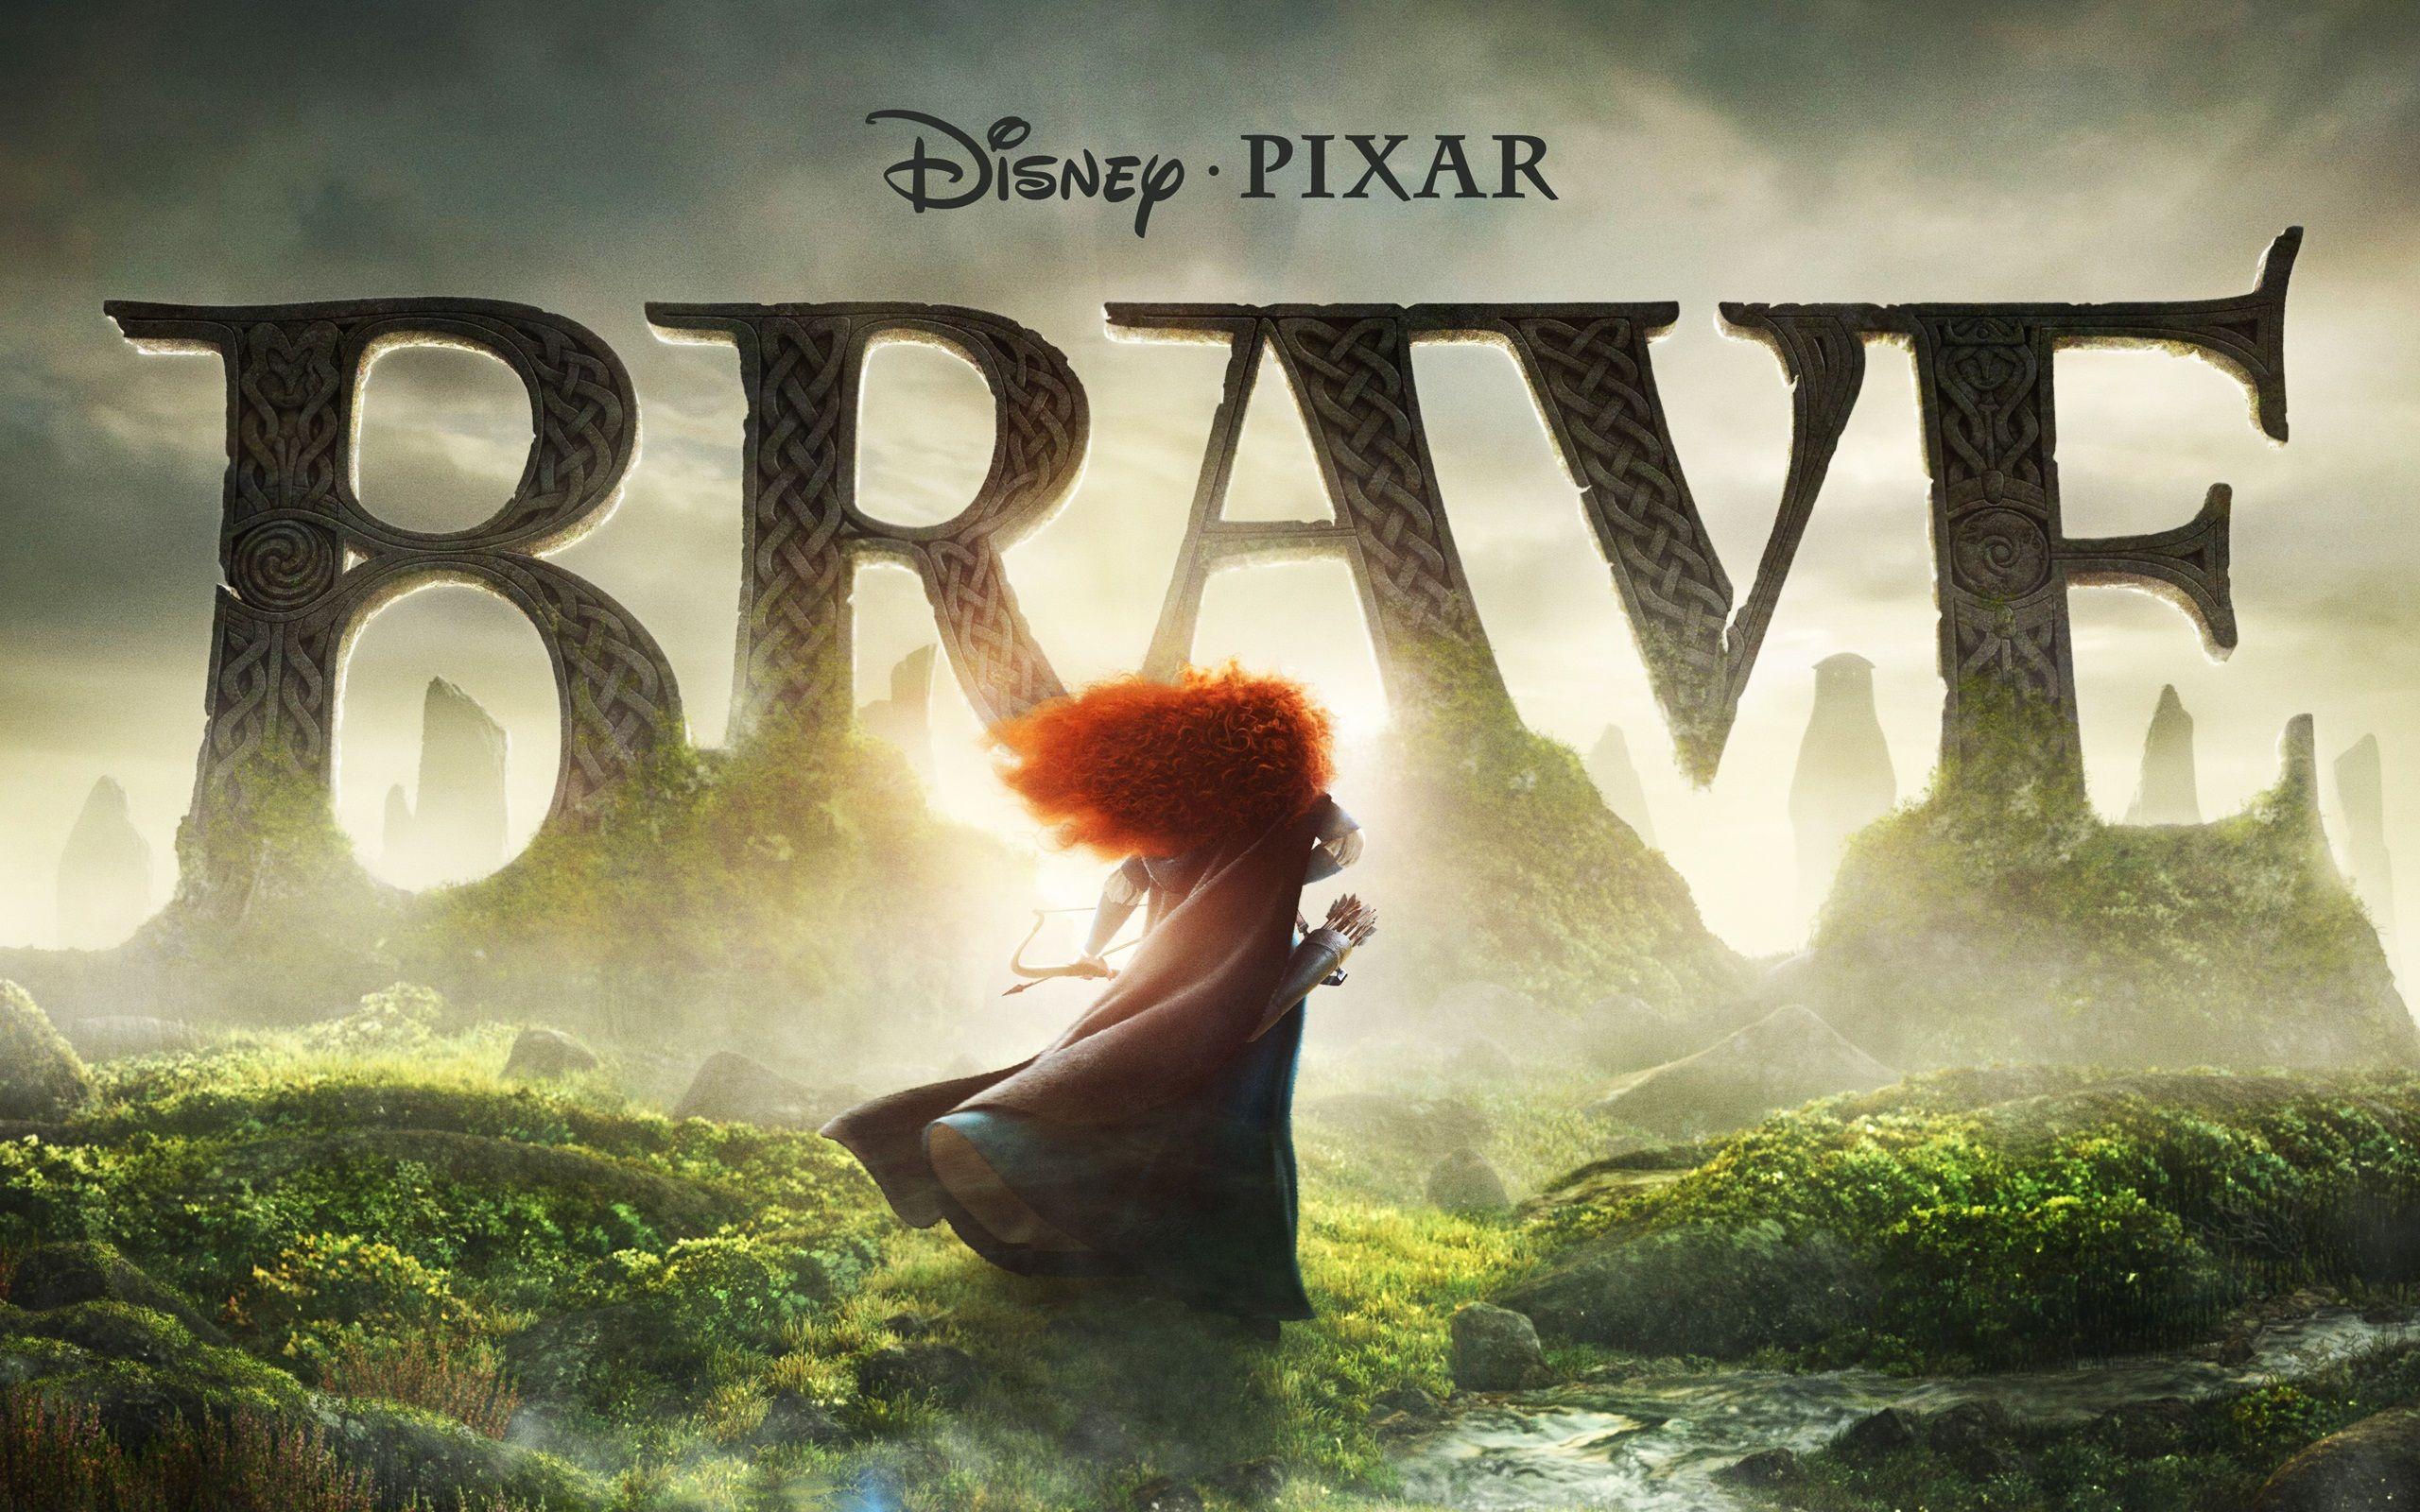 Disney Pixar Brave Logo - Disney Pixar Gets Brave